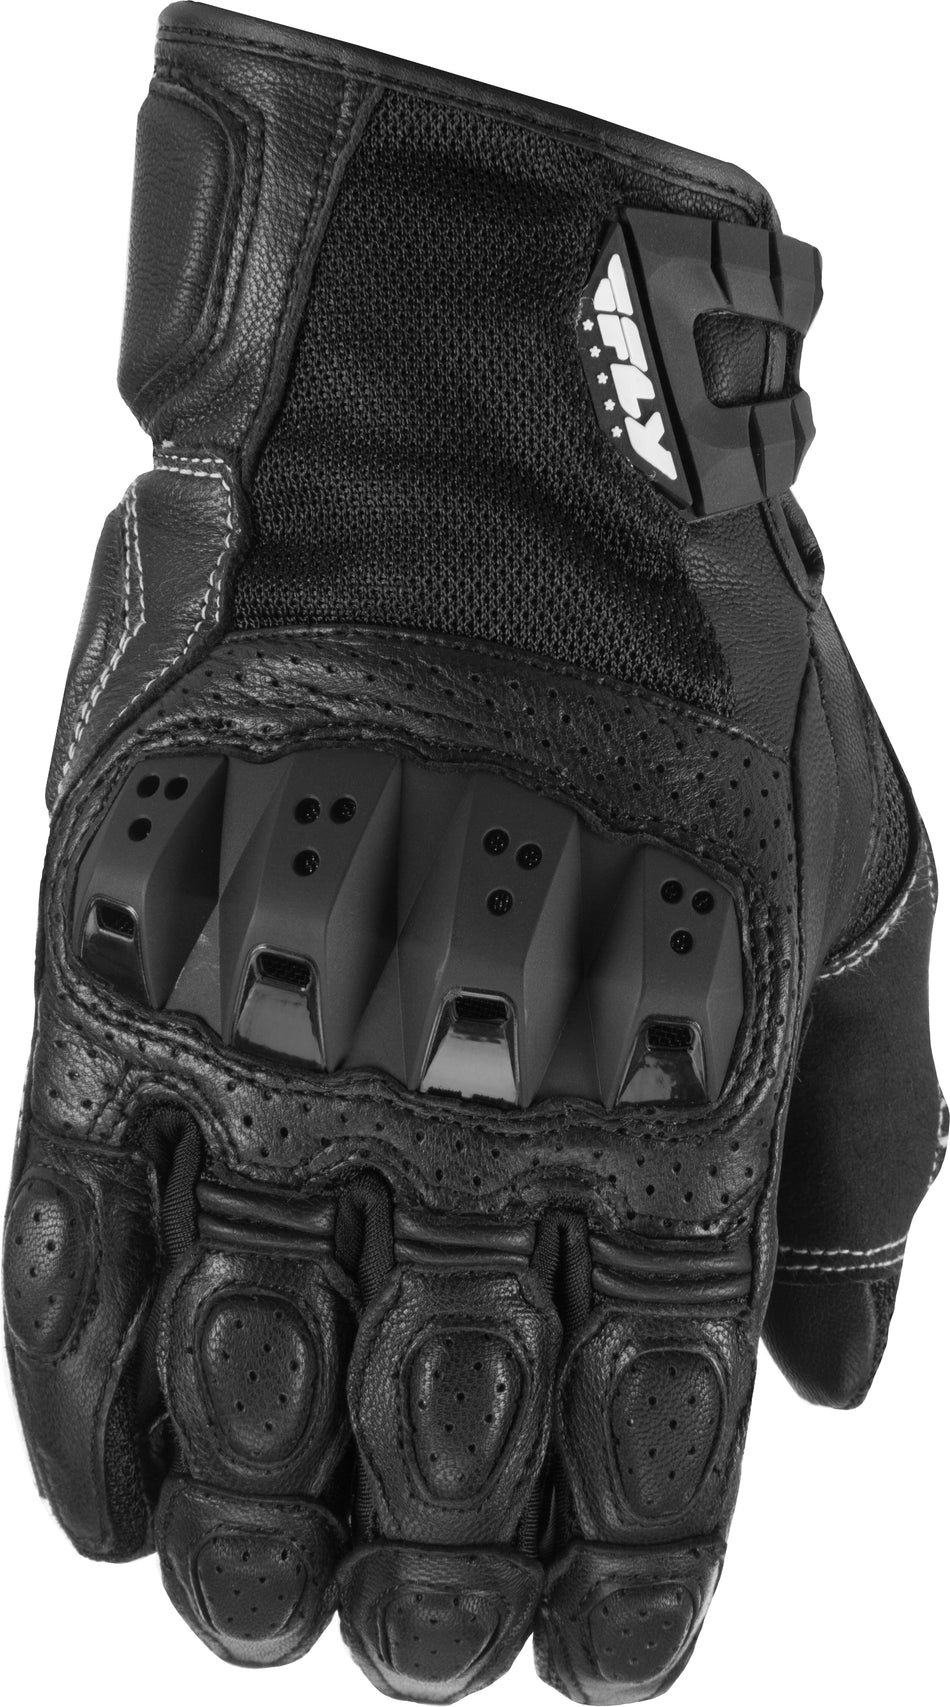 FLY RACING Brawler Gloves Black Sm #5884 476-2040~2